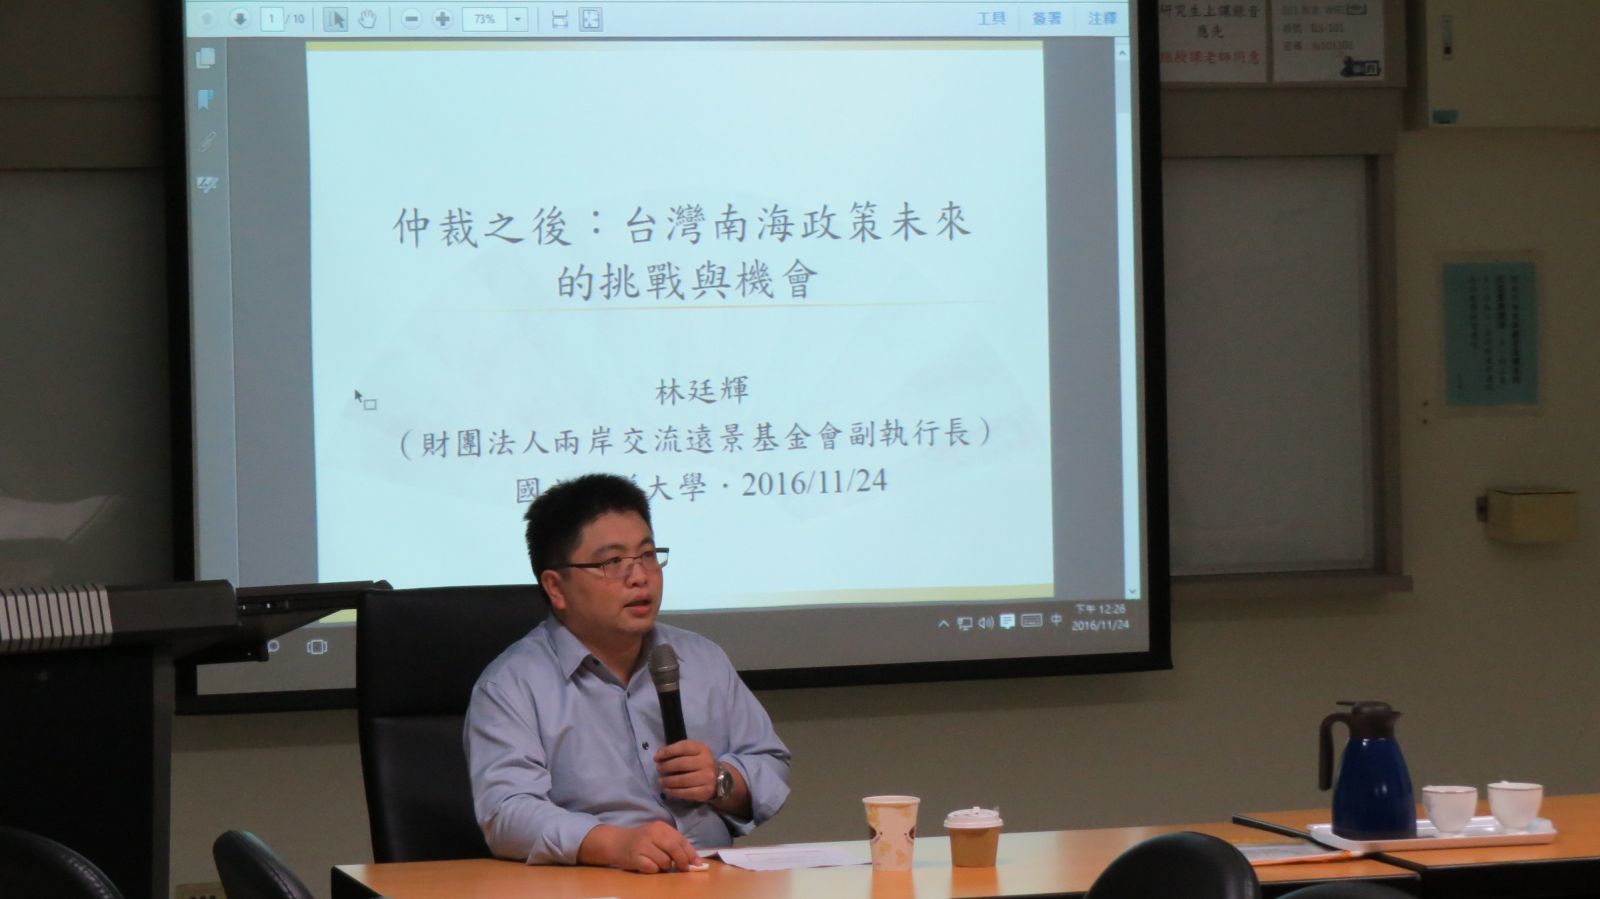 Deputy Chief Executive Lin Tinghui, Cross-Strait Exchange Vision Foundation